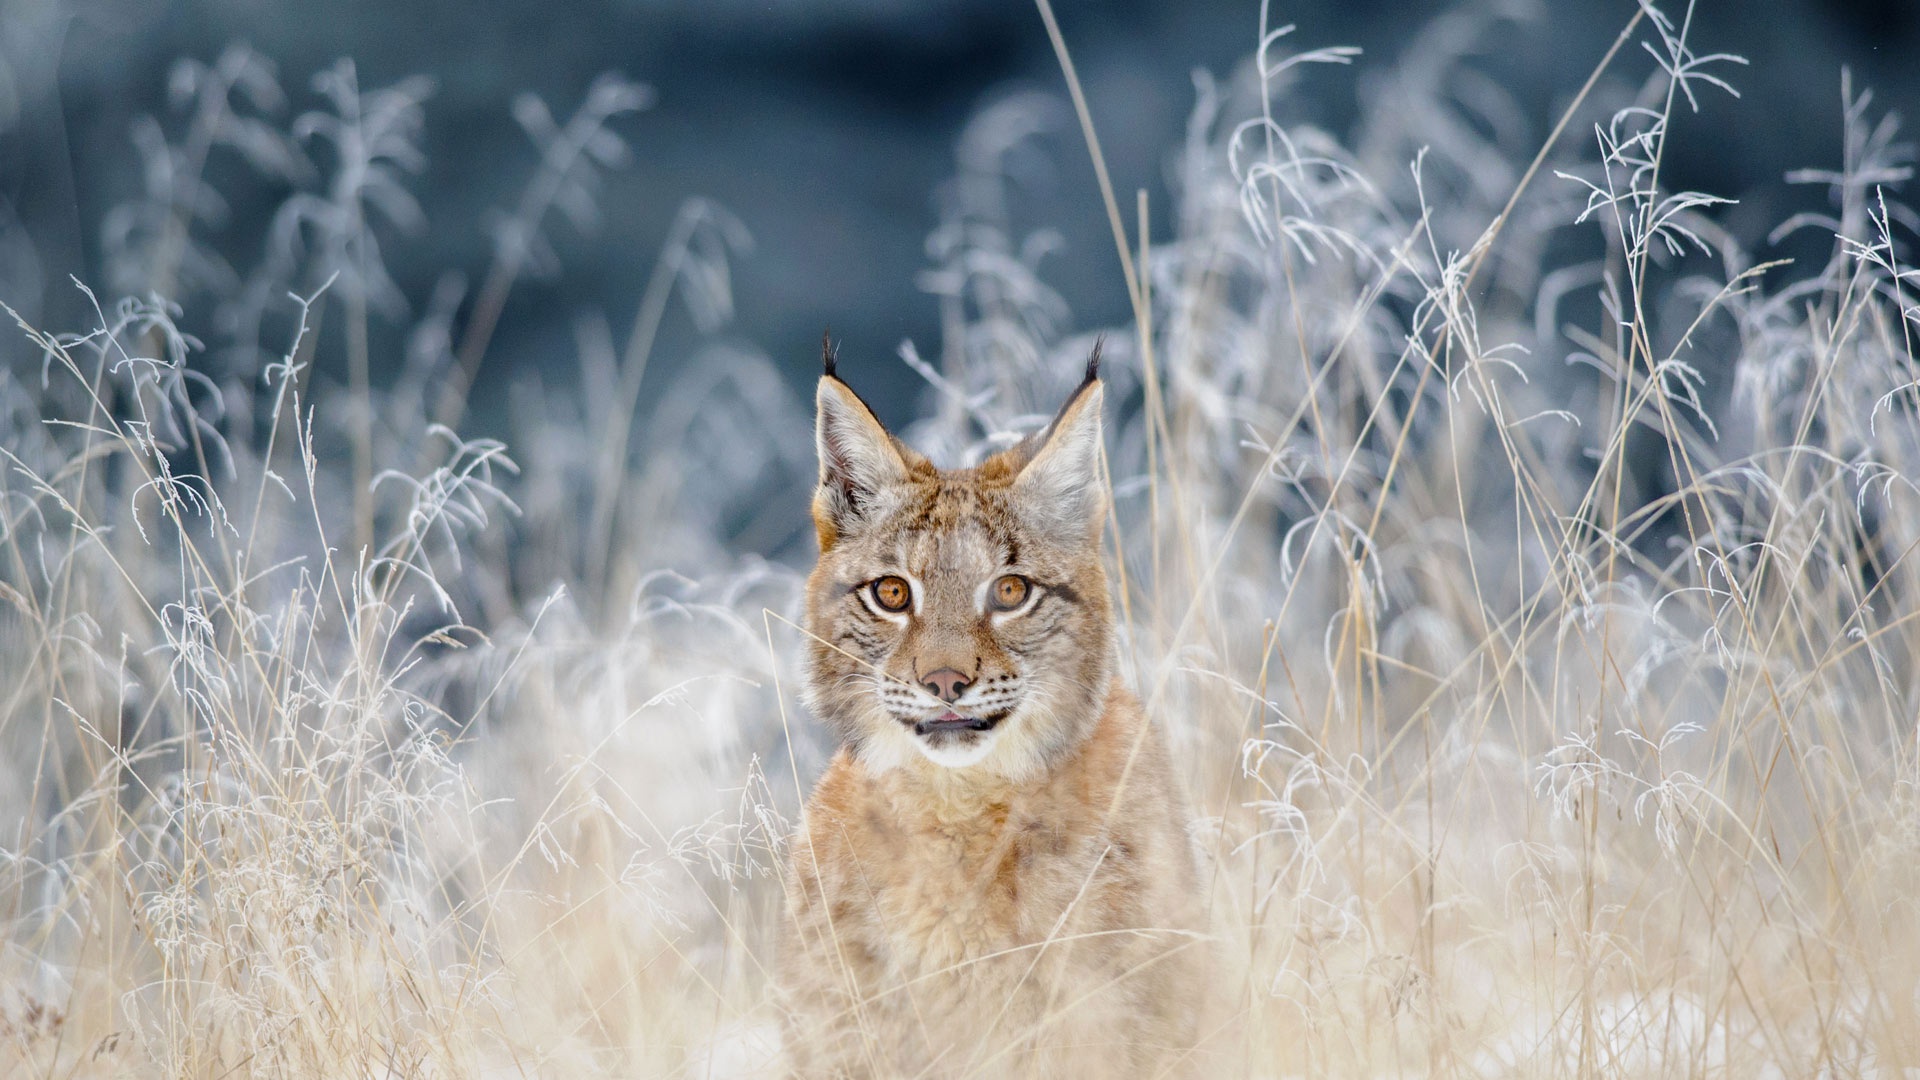 Big Cat Lynx Wildlife Predator Animal 1920x1080